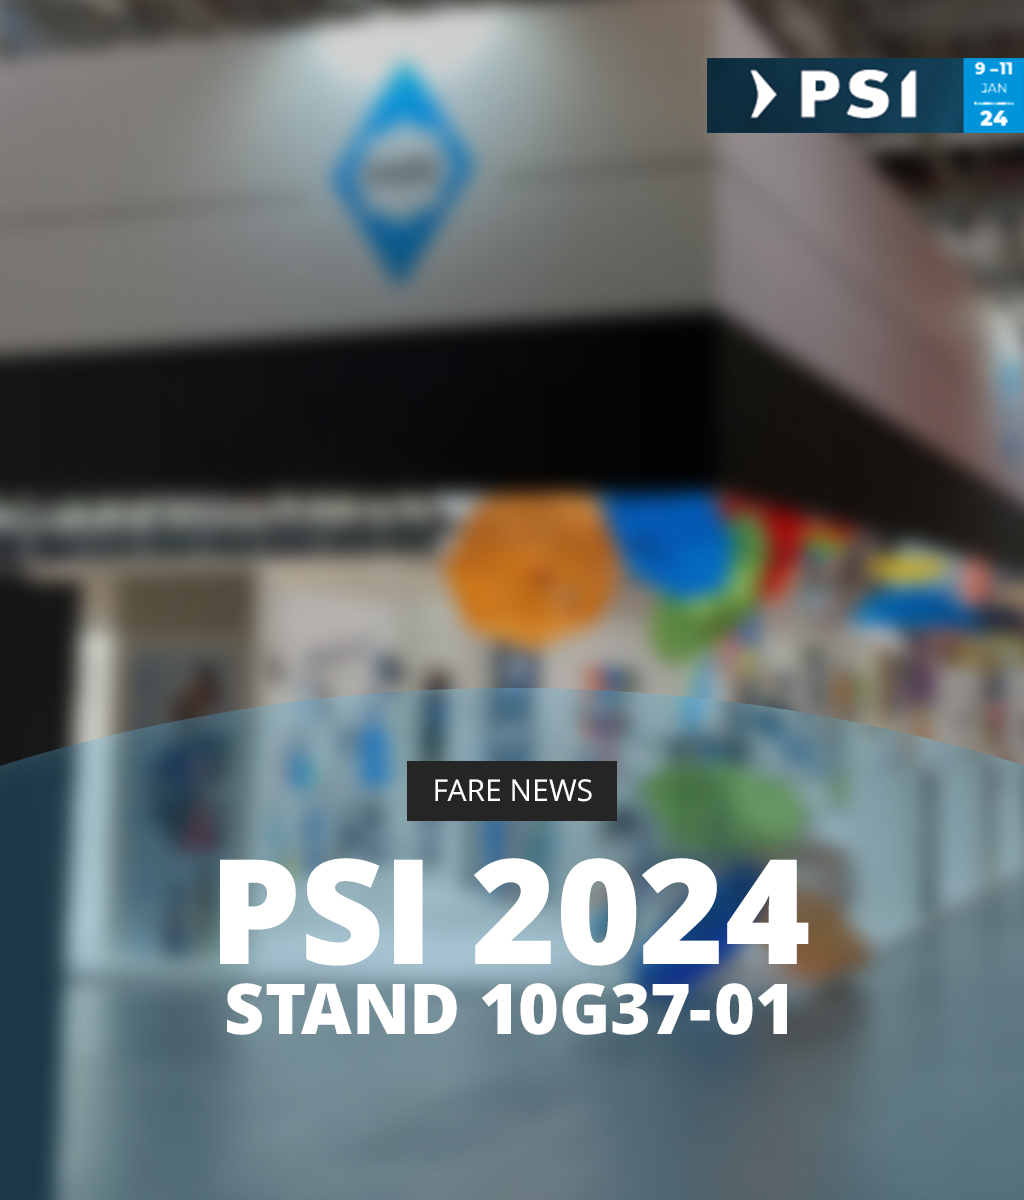 PSI Messe Ankündigung 2024 Düsseldorf